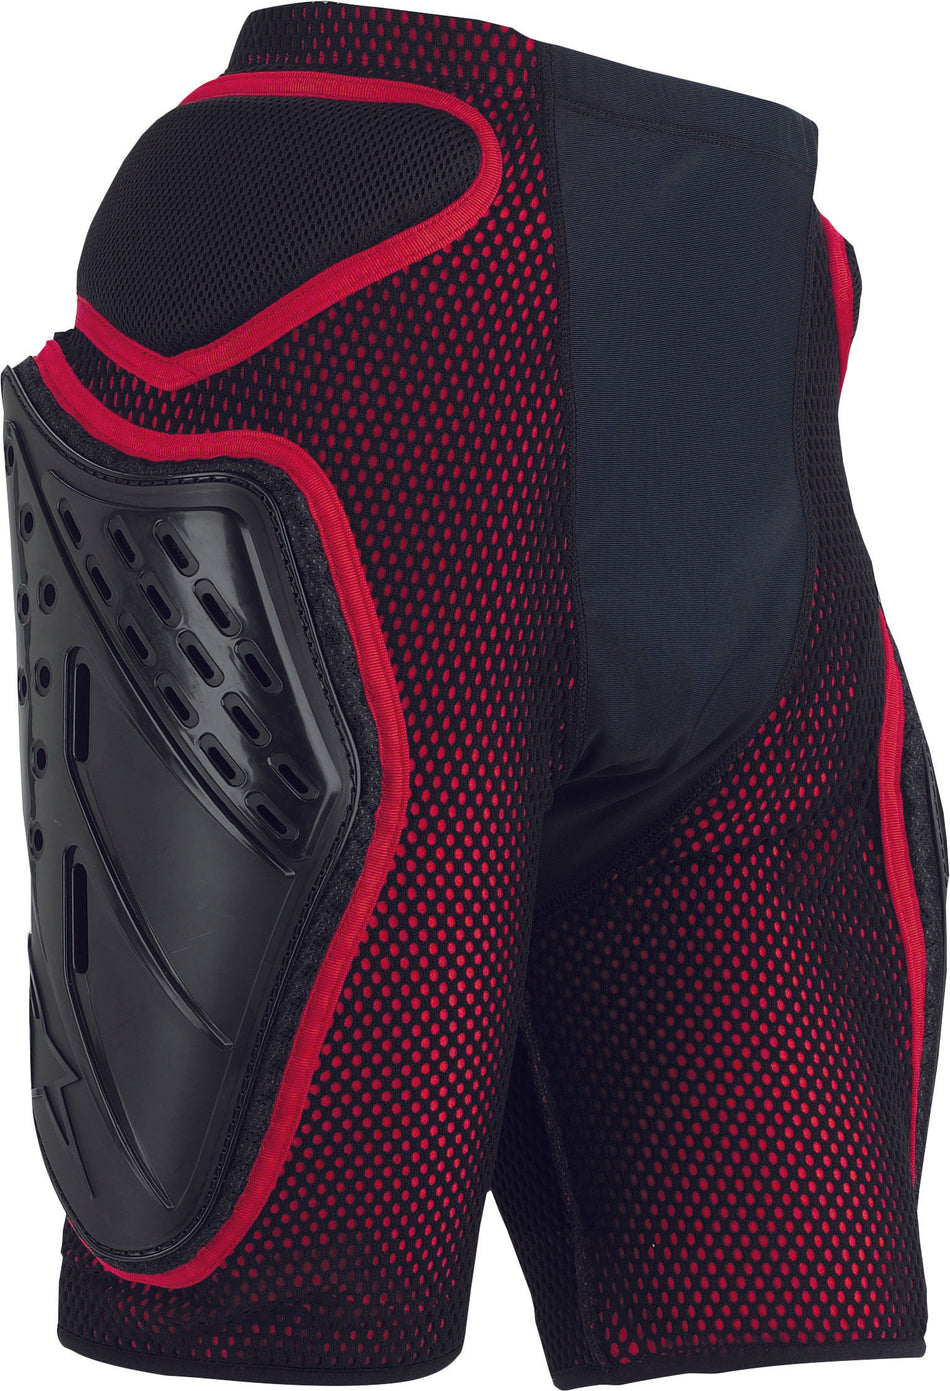 ALPINESTARS Freeride Shorts Black/Red Md 650707-13-M